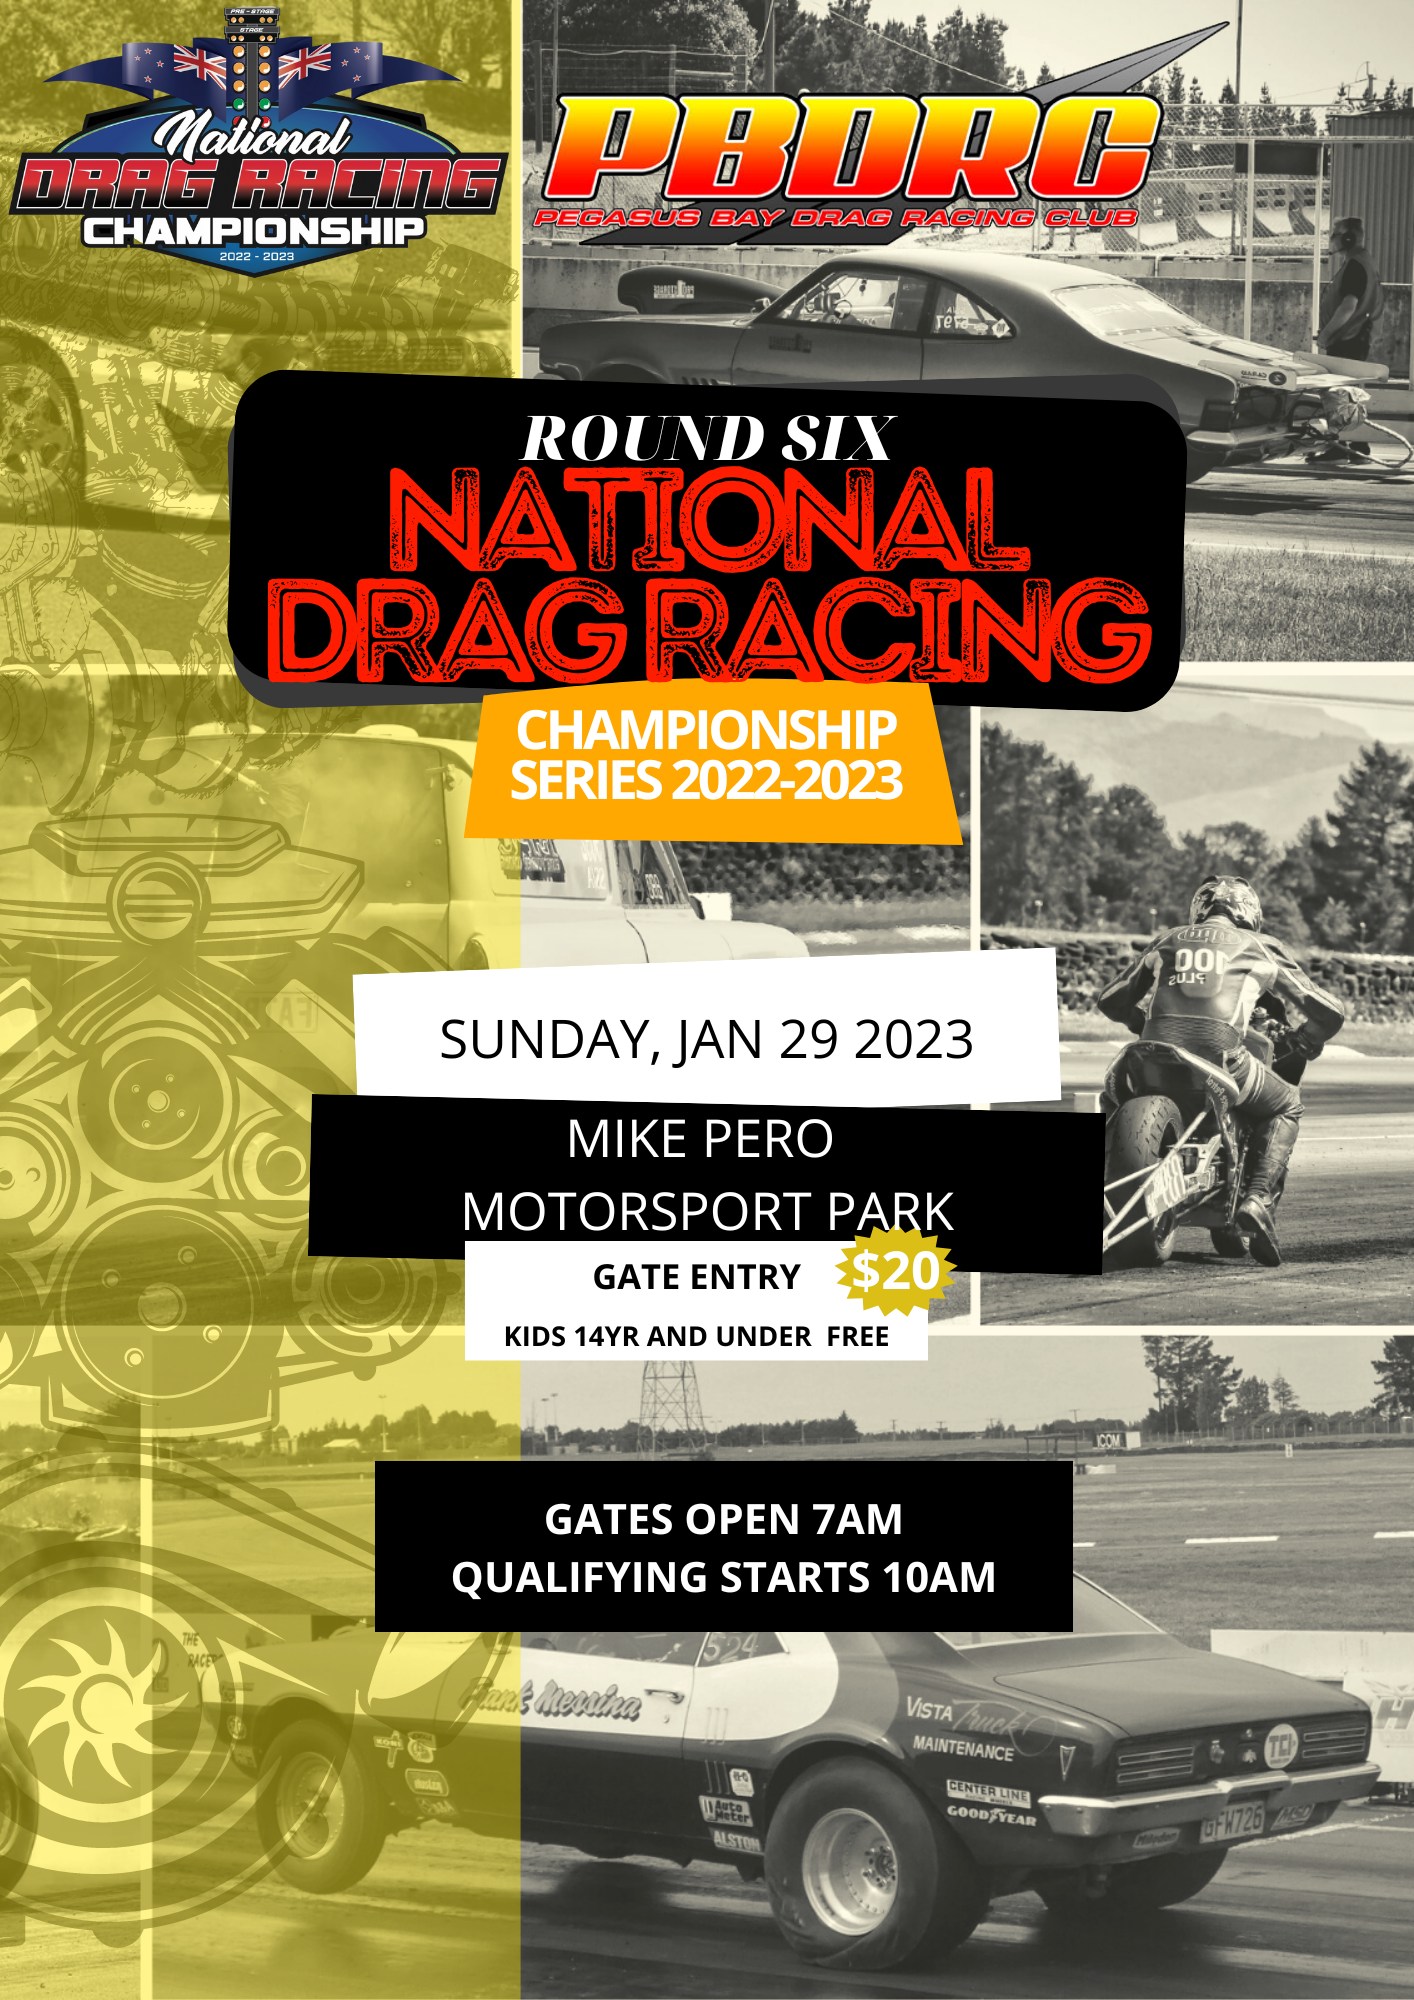 2022/23 National Drag Racing Championship Series. Round 6 poster